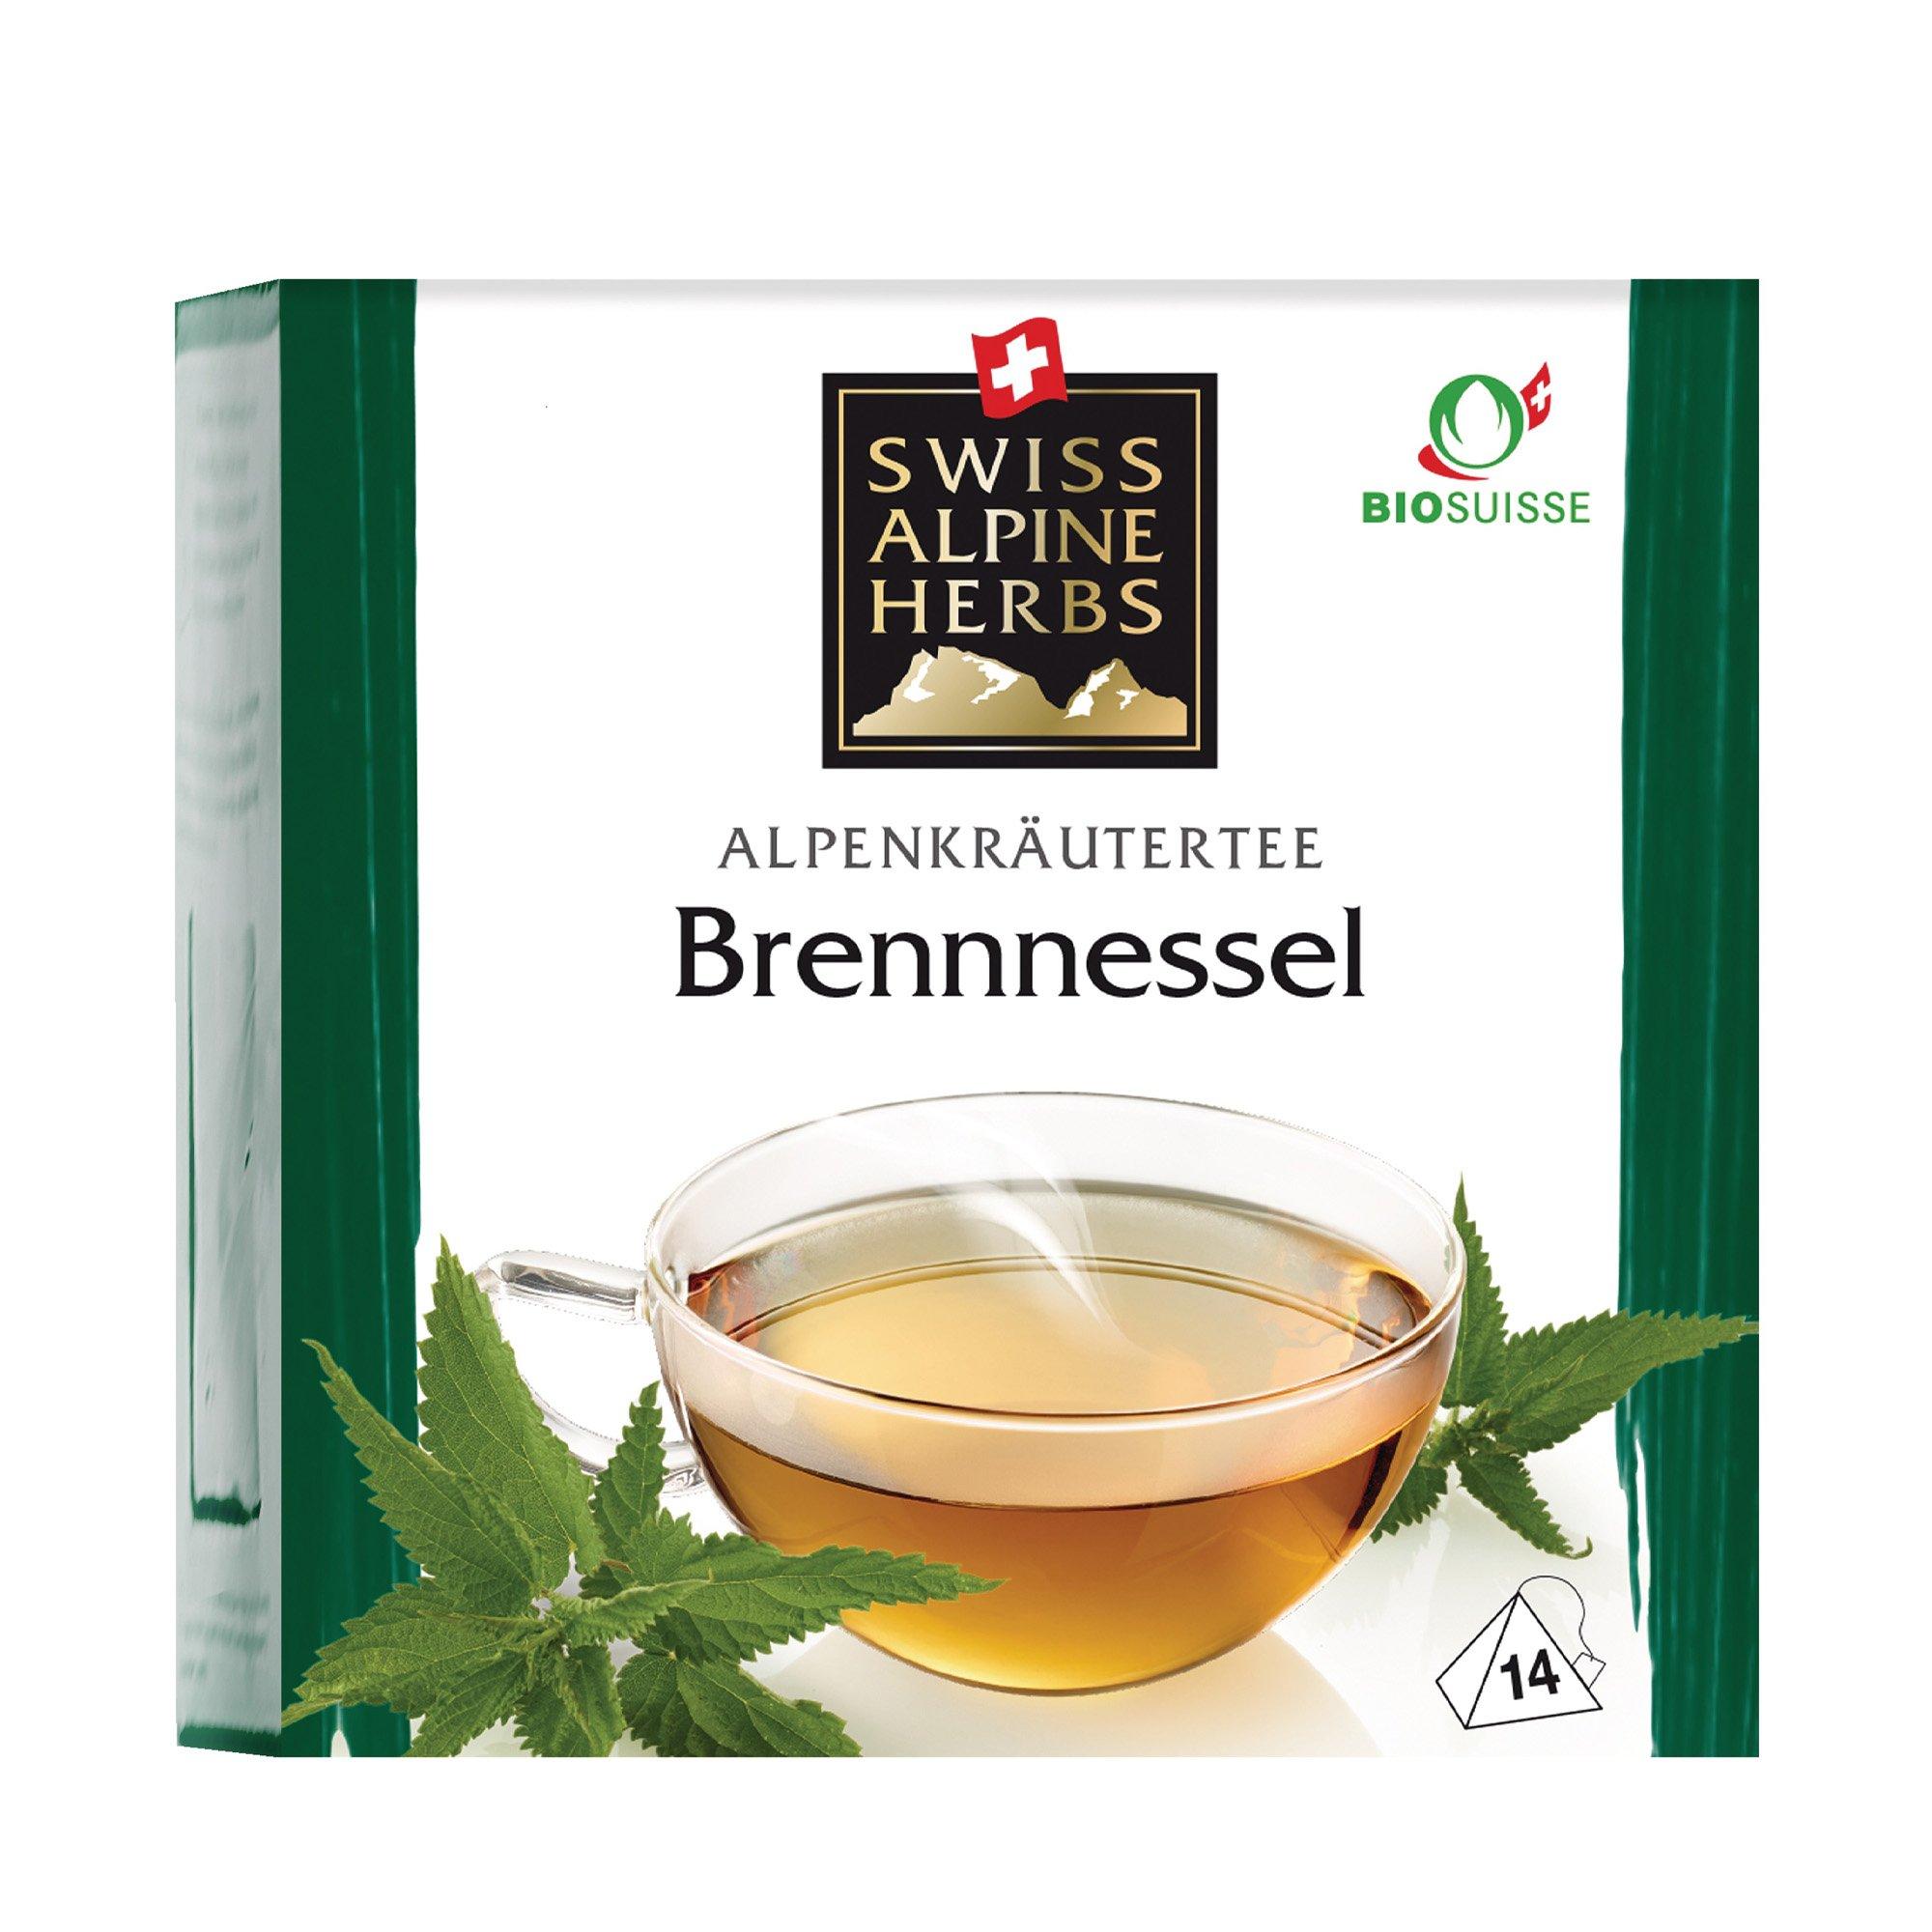 Image of Swiss Alpine Herbs Brennnessel - 14X1G